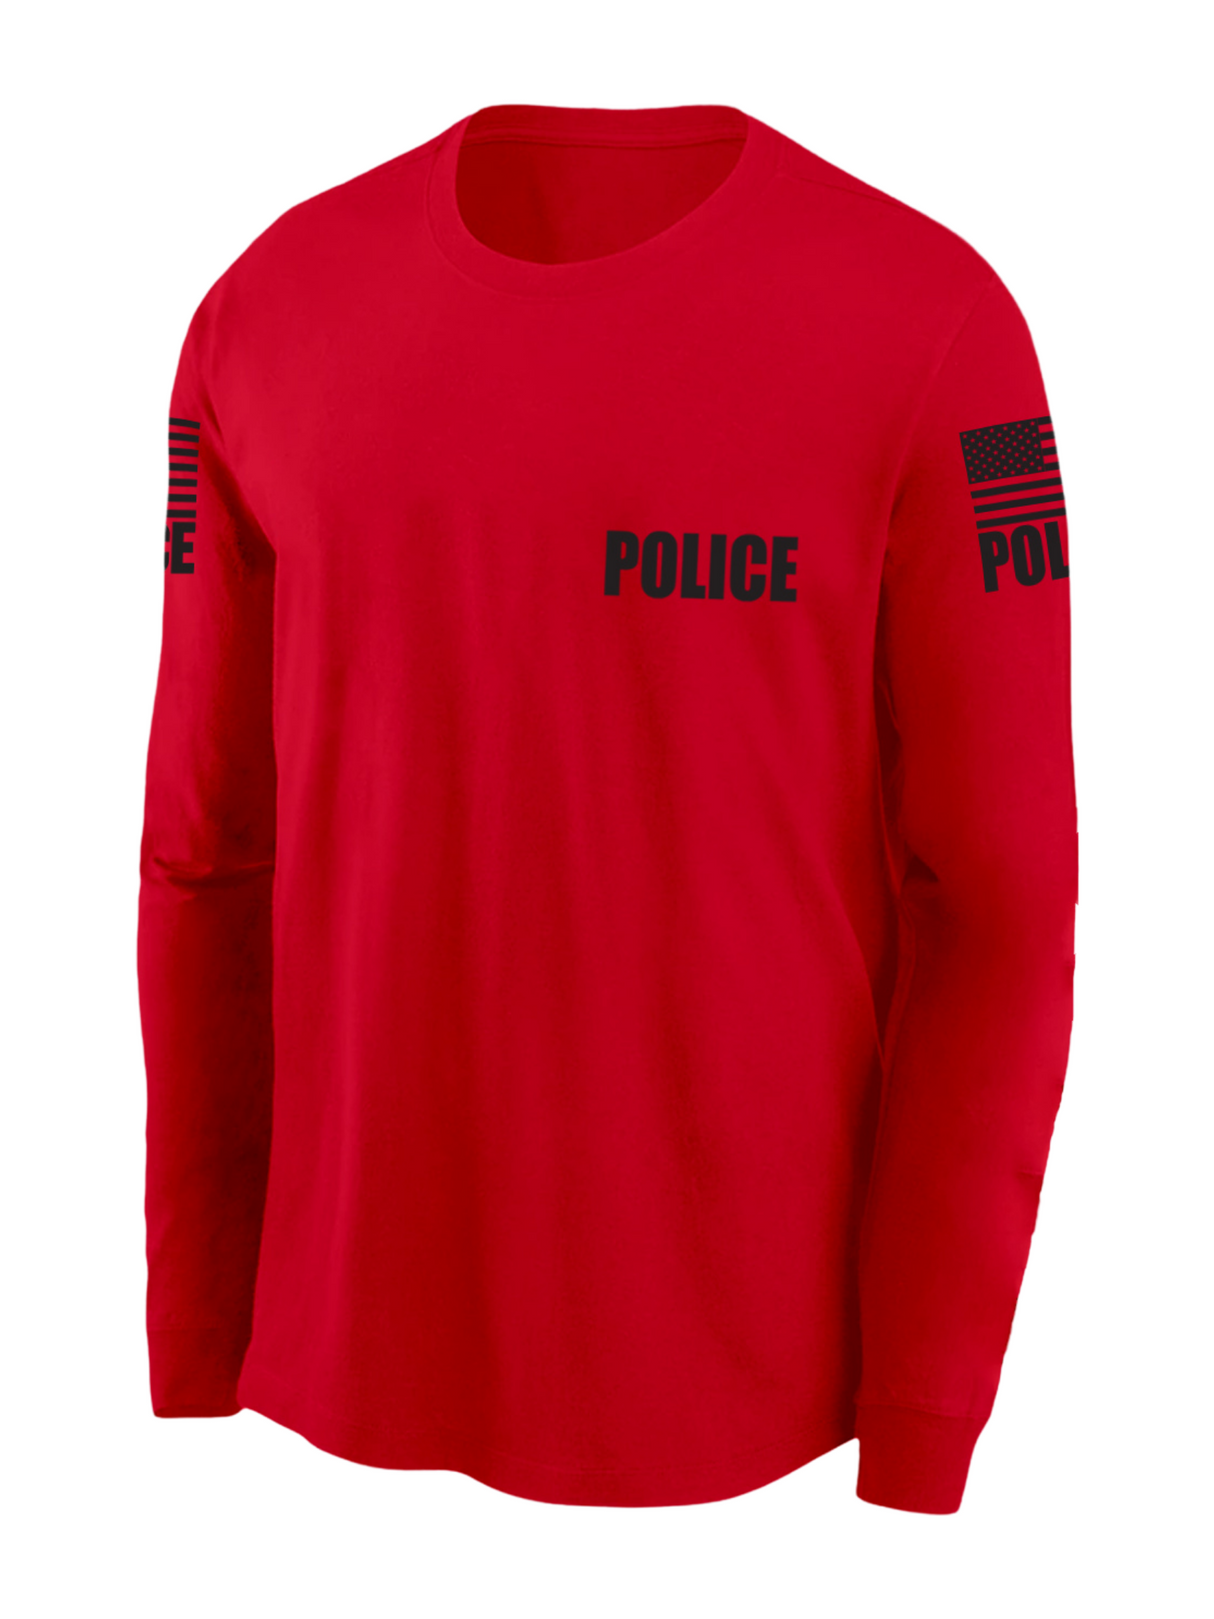 red cop shirt